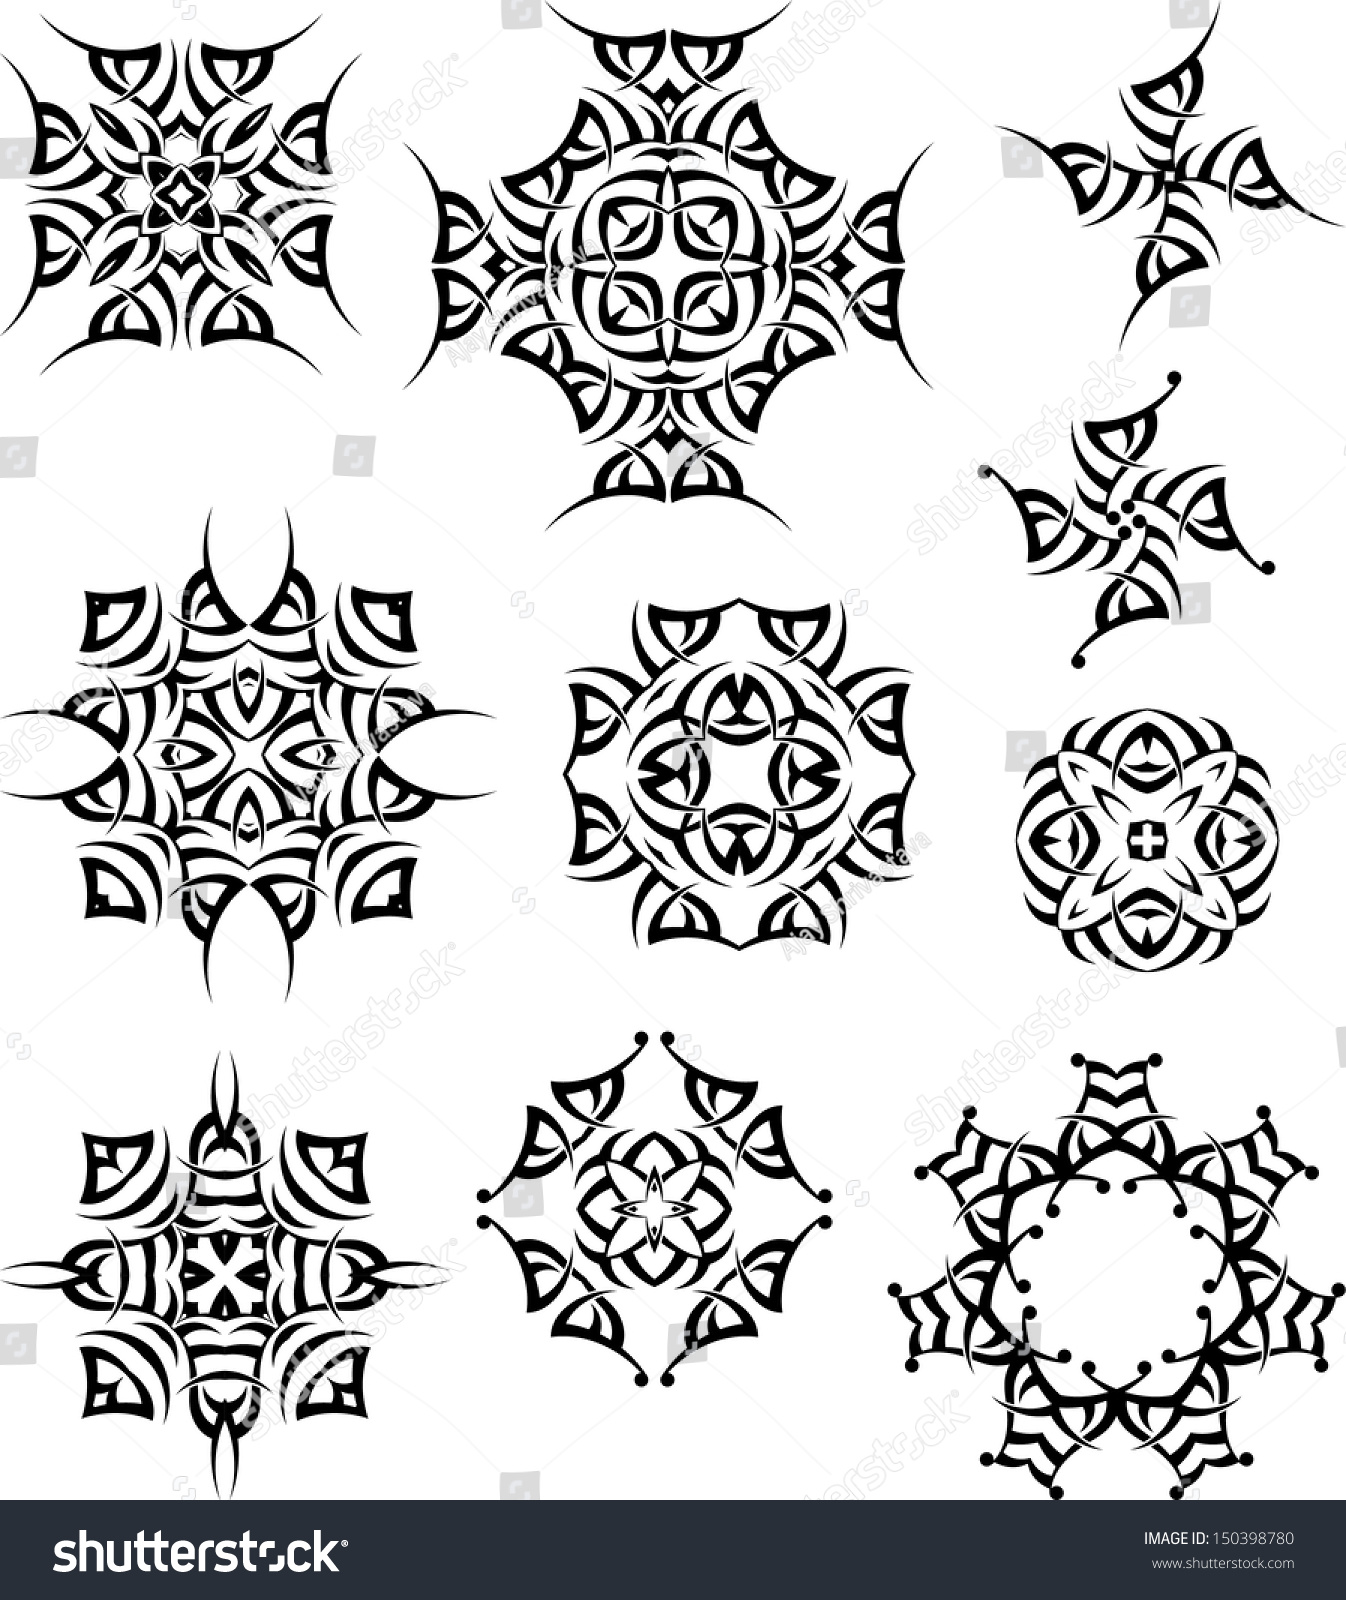 Tattoo Tribal Design Stock Illustration 150398780 - Shutterstock